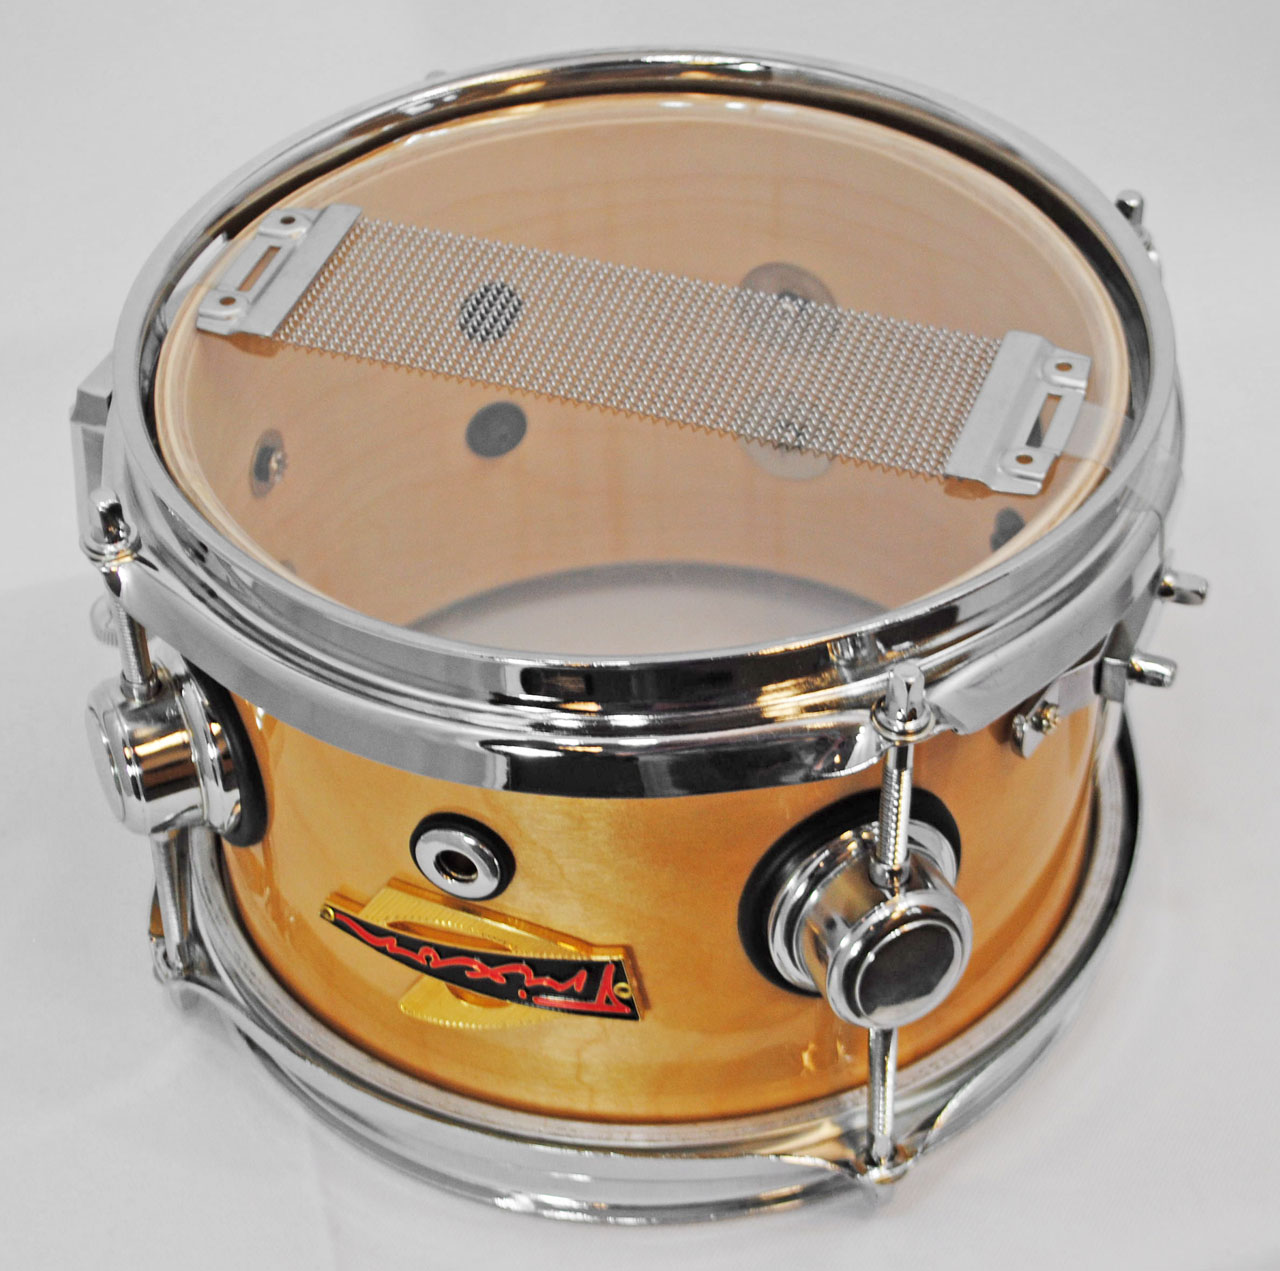 Trixon Elite Popcorn Snare Drum - Natural